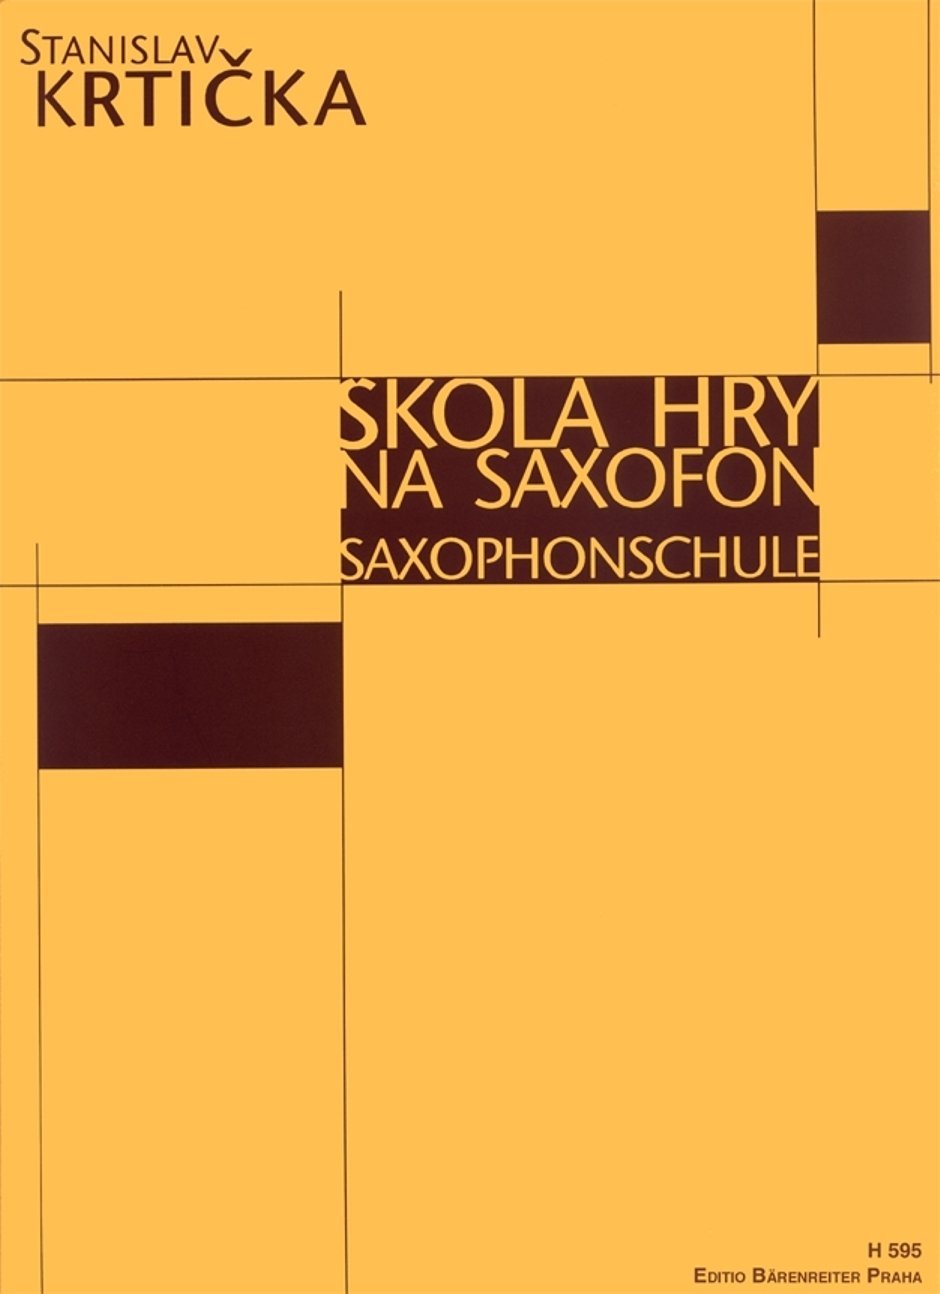 Noten für Blasinstrumente Stanislav Krtička Škola hry na saxofon Noten